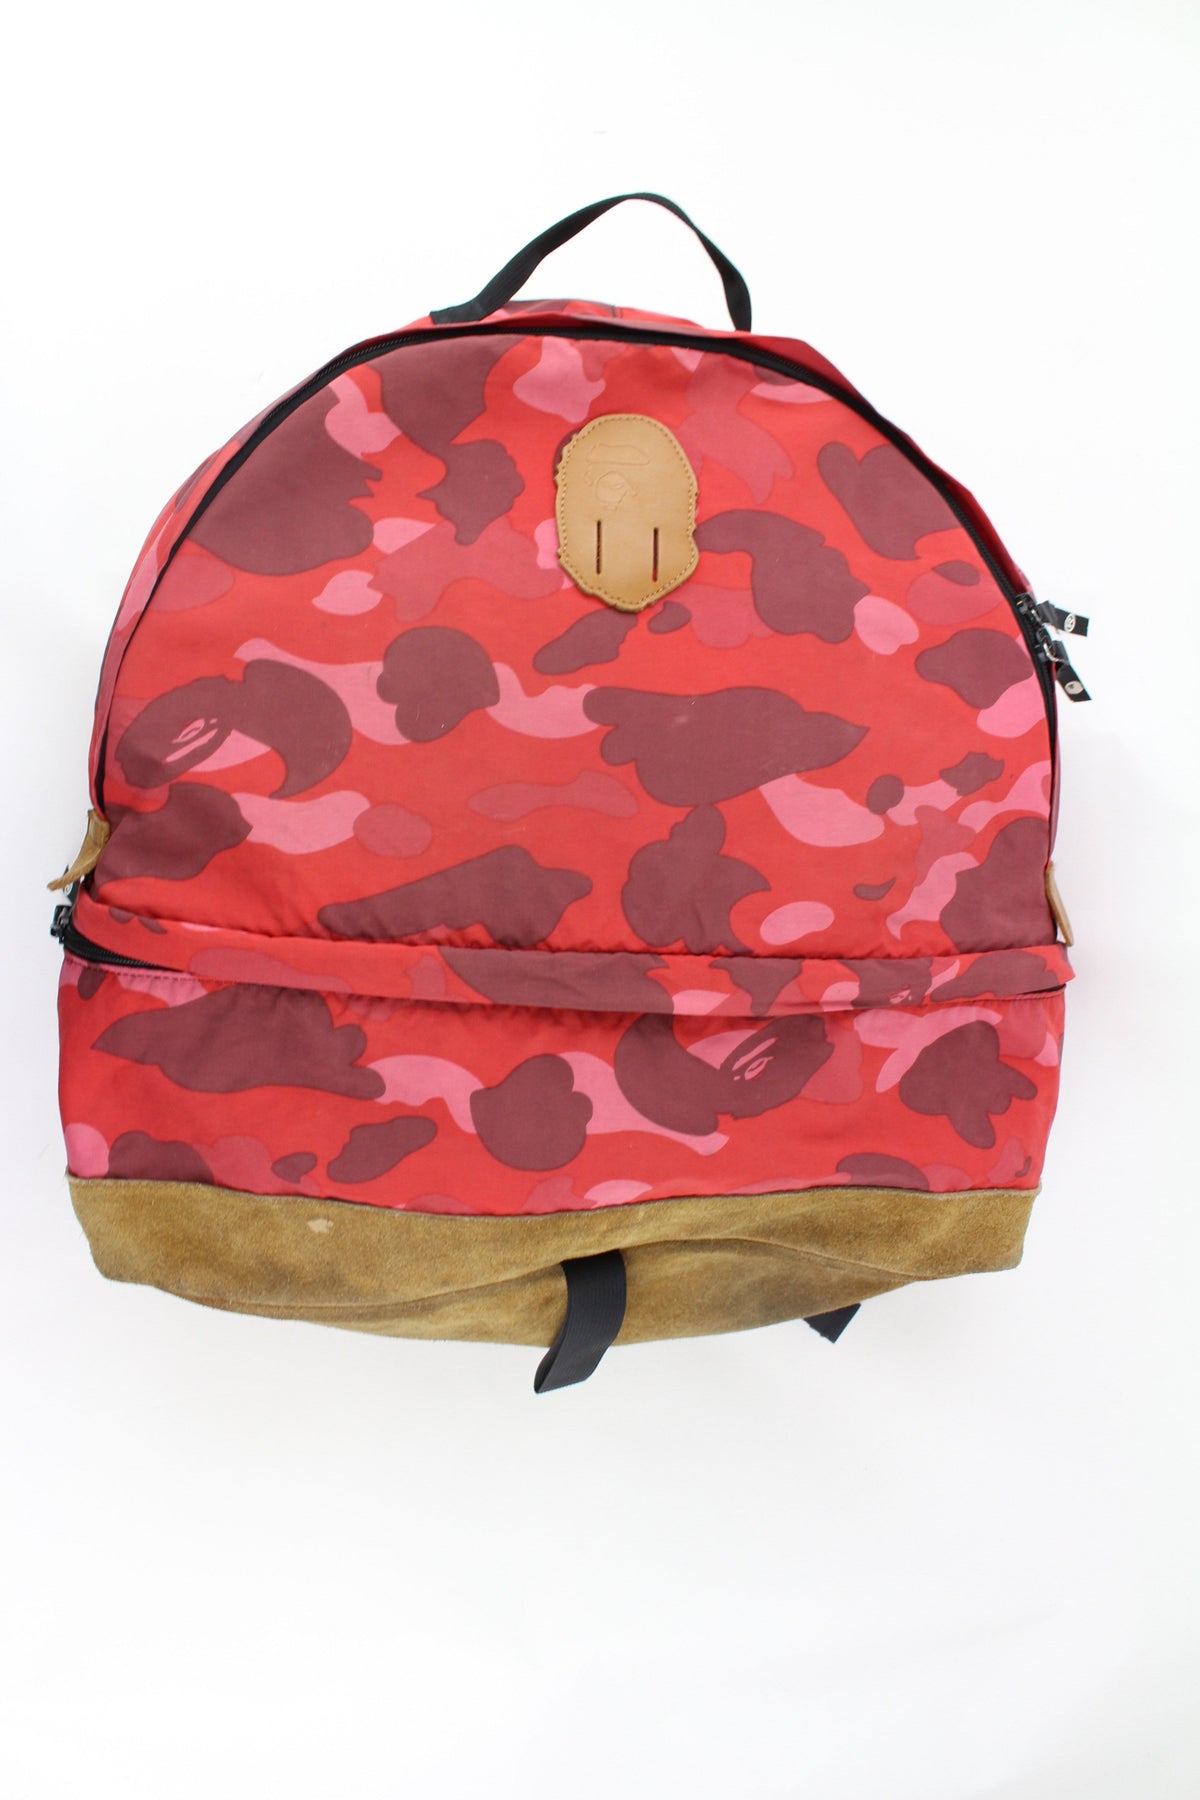 bape red camo backpack | SARUUK